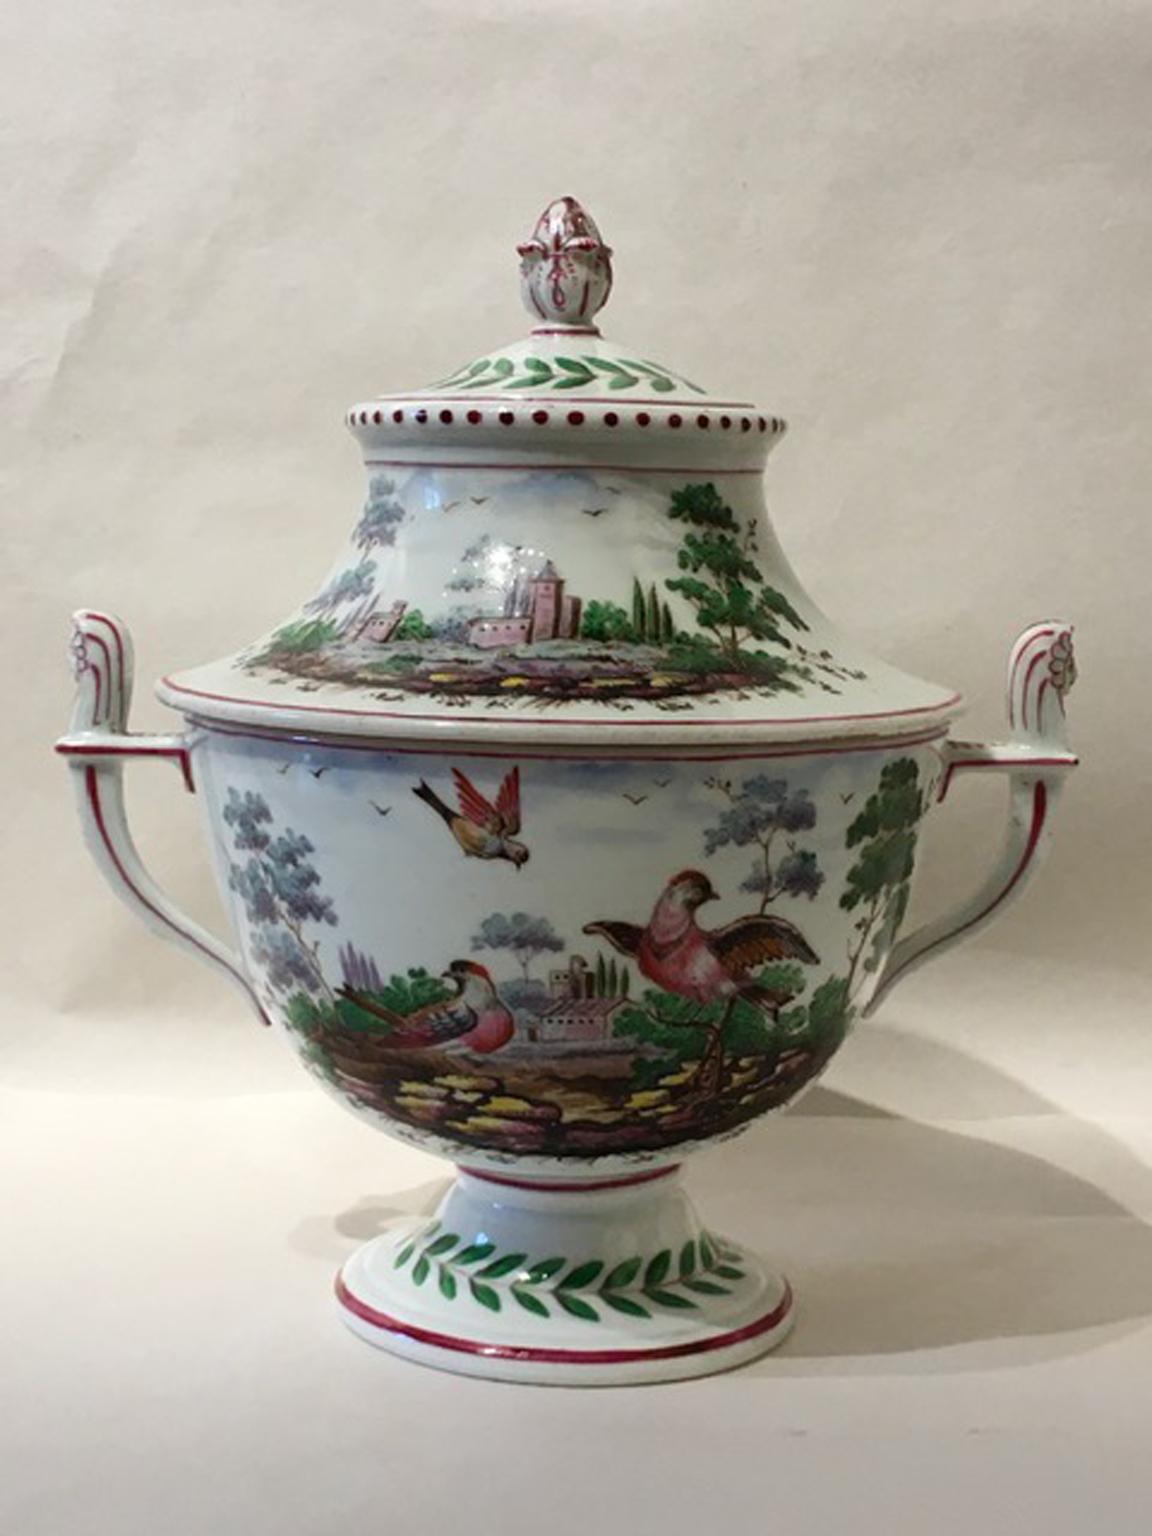 Italy Richard Ginori Doccia 19th Century Porcelain Covered Vase with Landscape For Sale 4